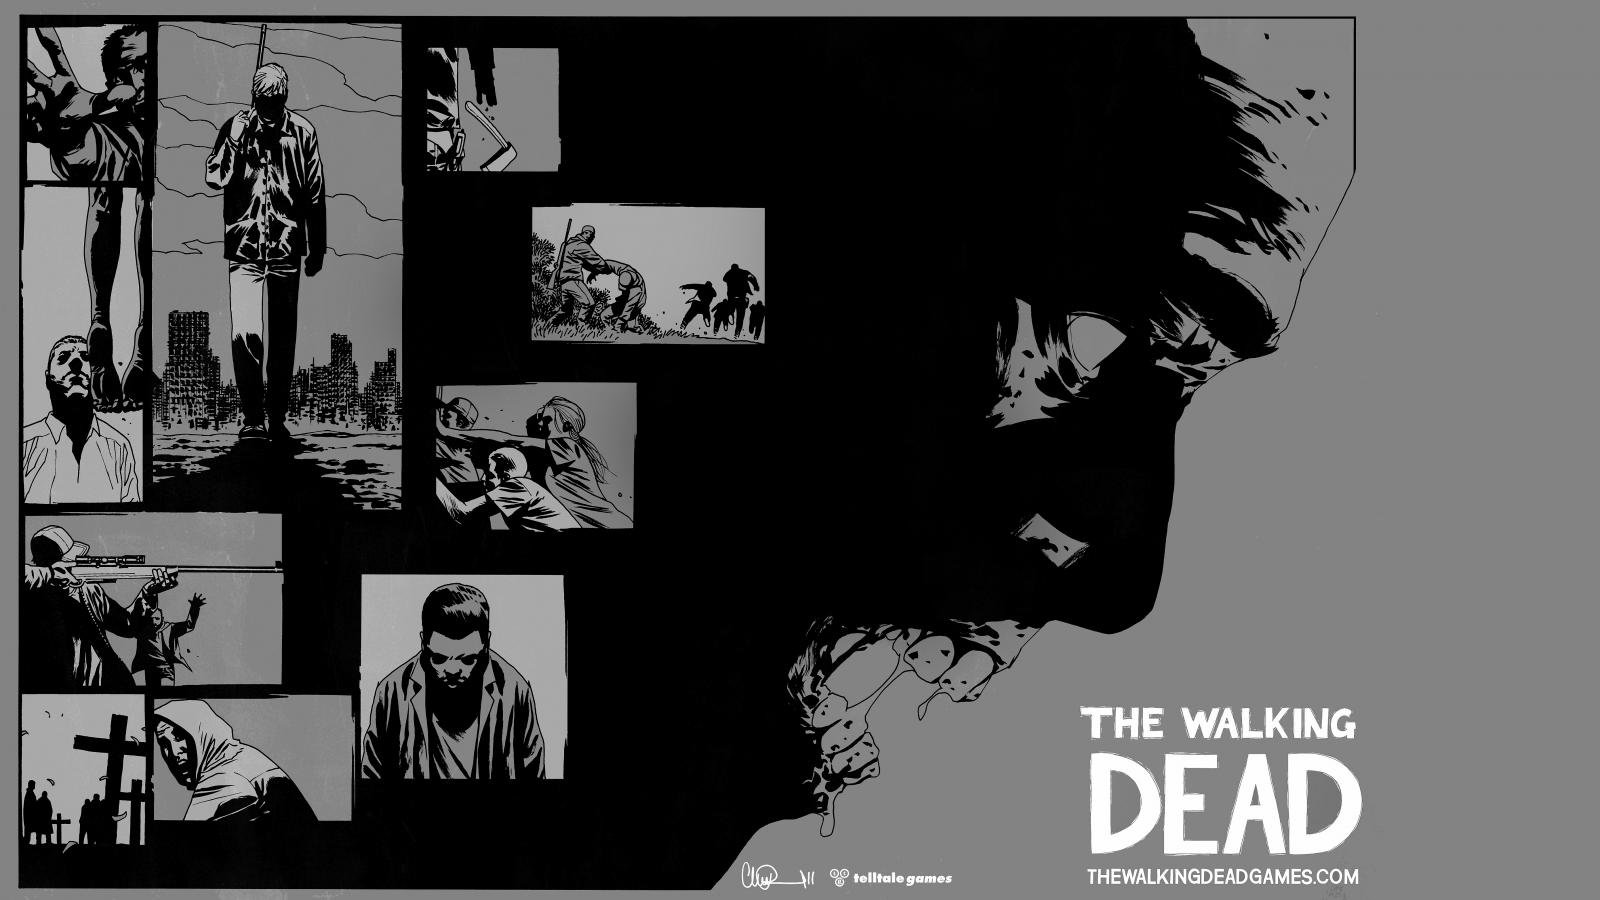 Best Walking Dead Comics wallpaper ID:84337 for High Resolution hd 1600x900 computer